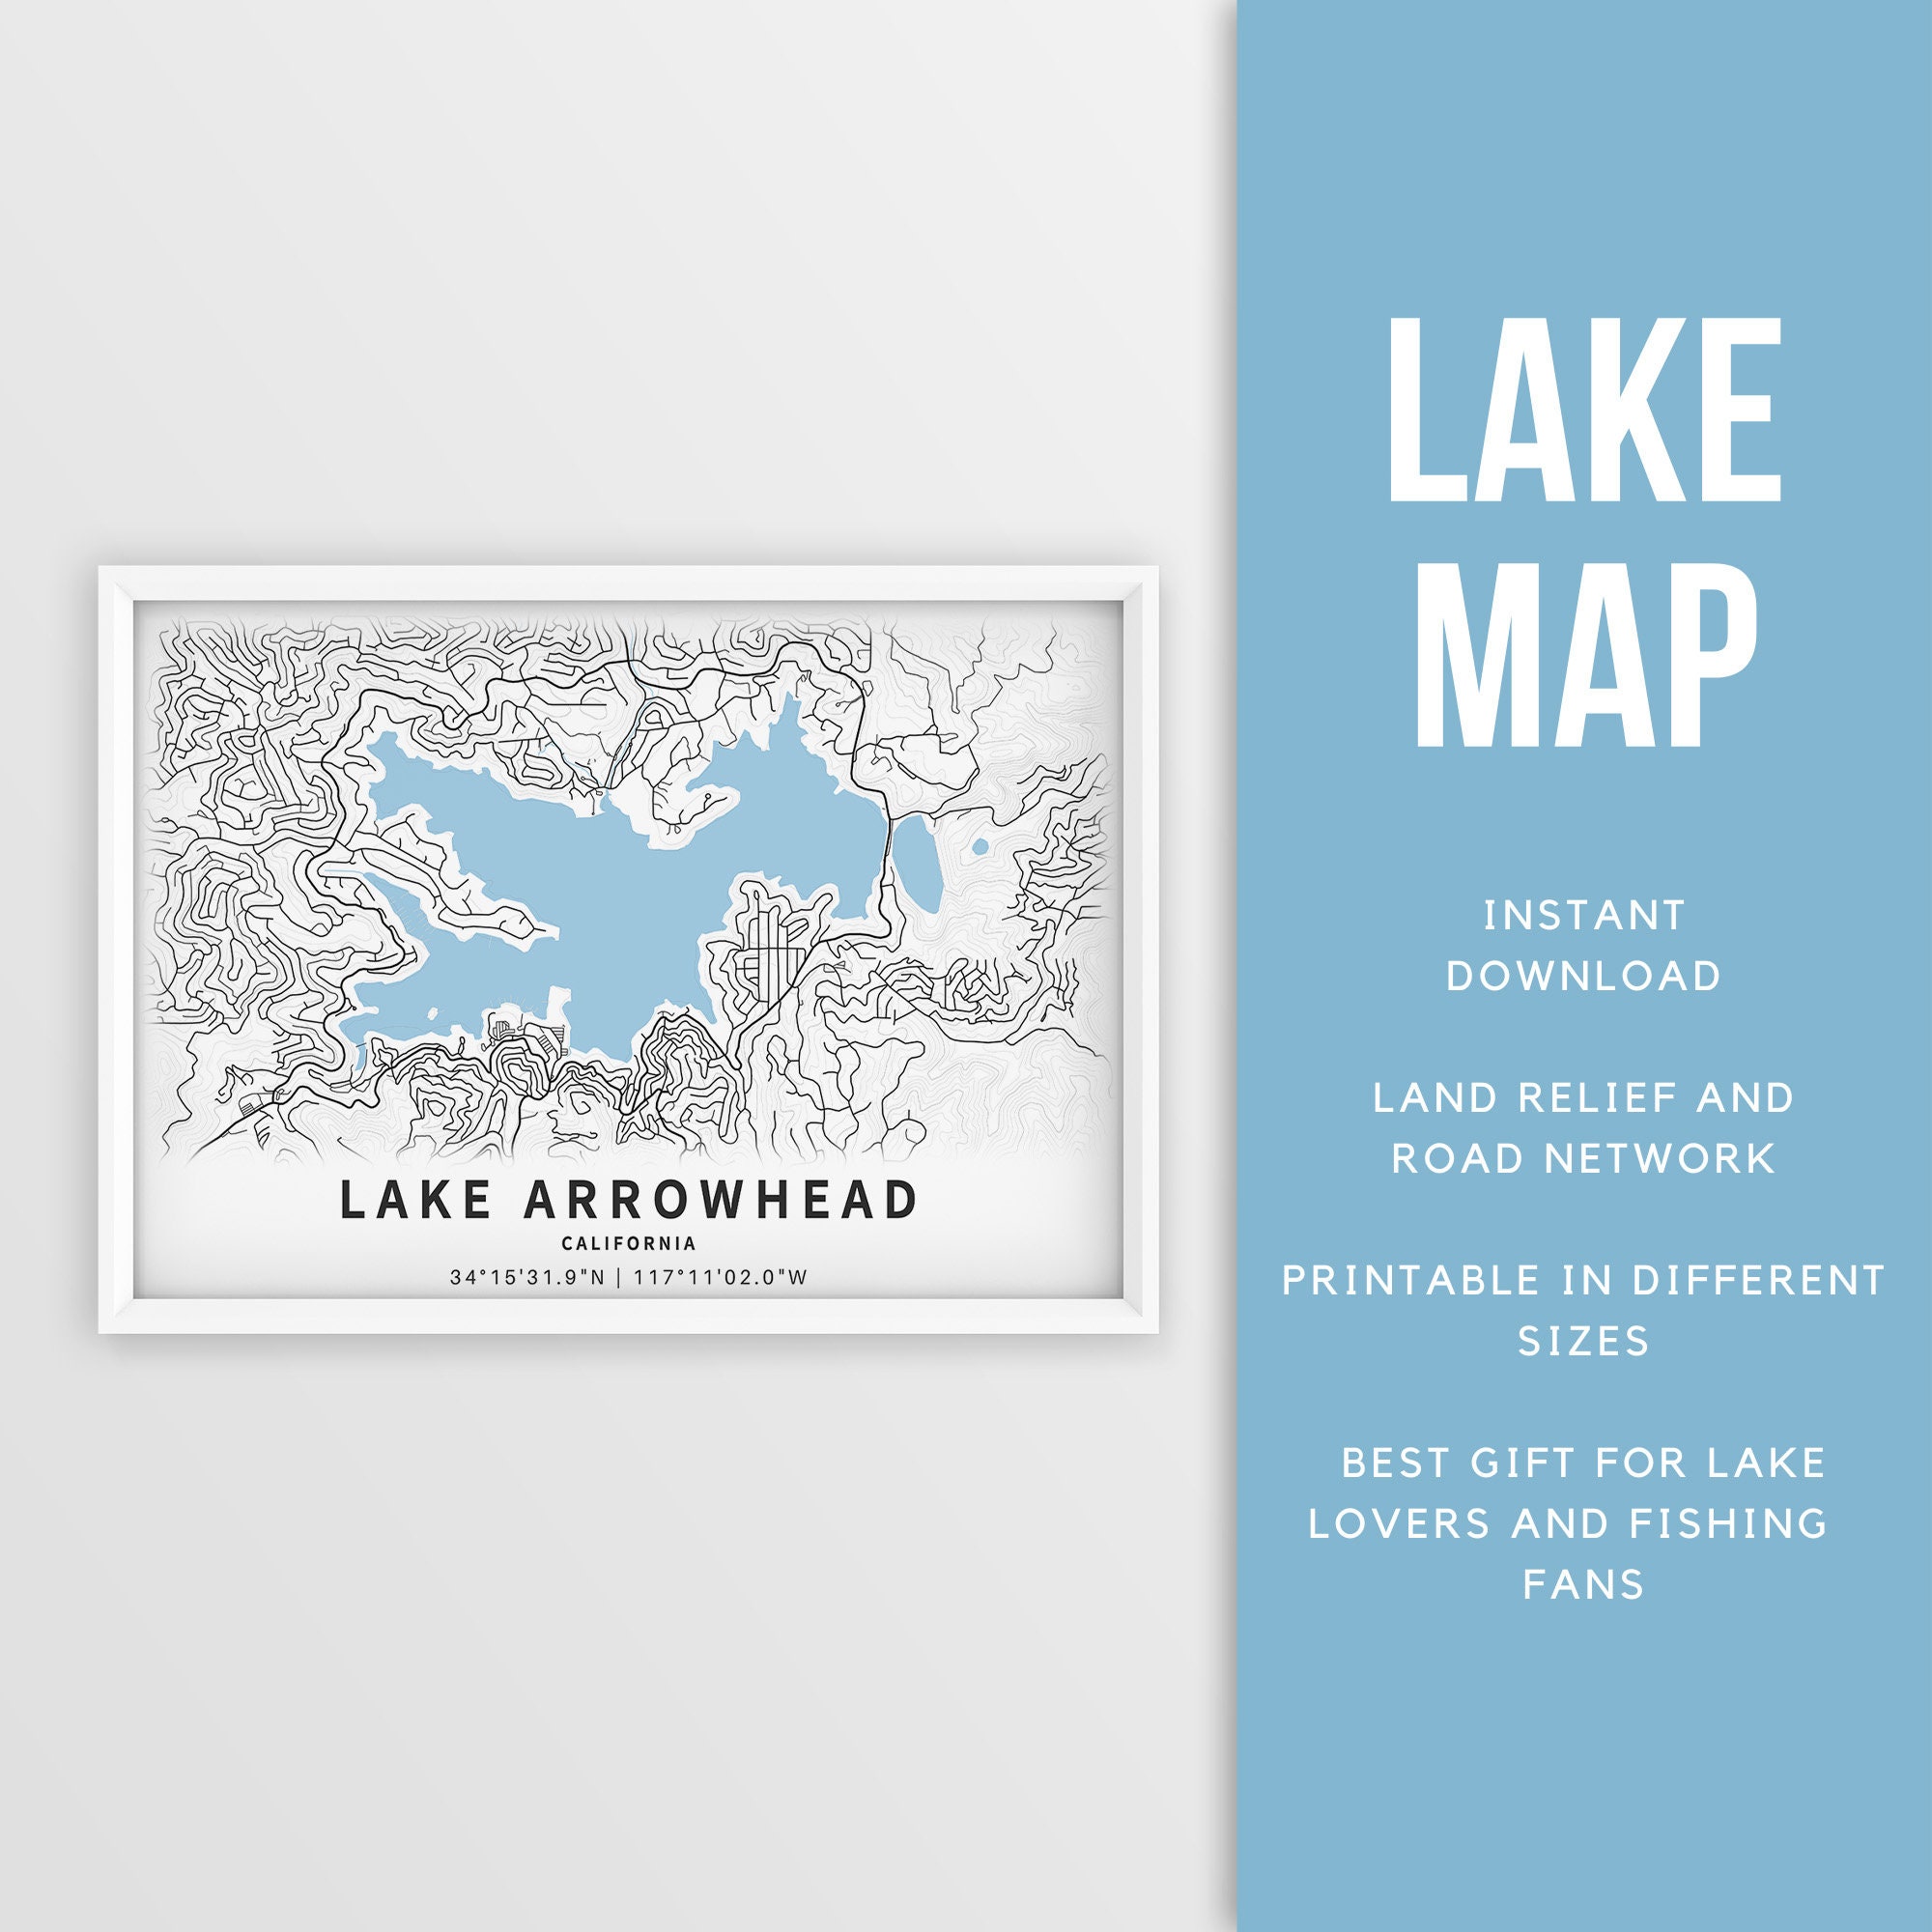 Lake Arrowhead picture